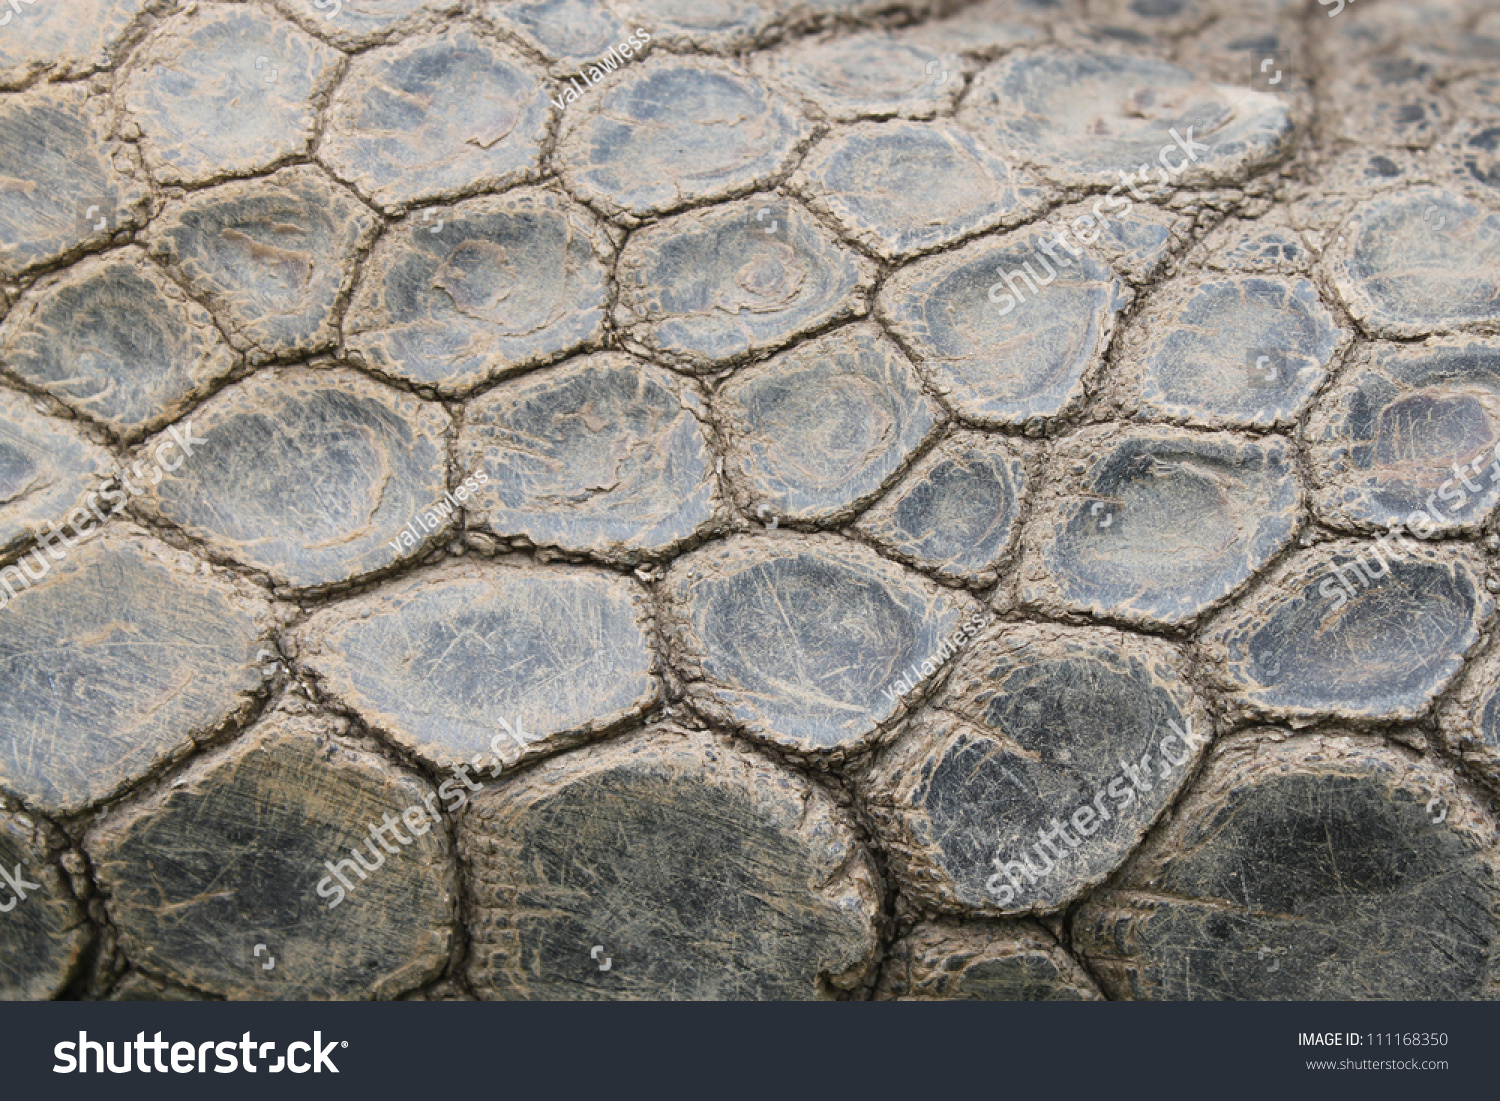 Turtle Skin texture